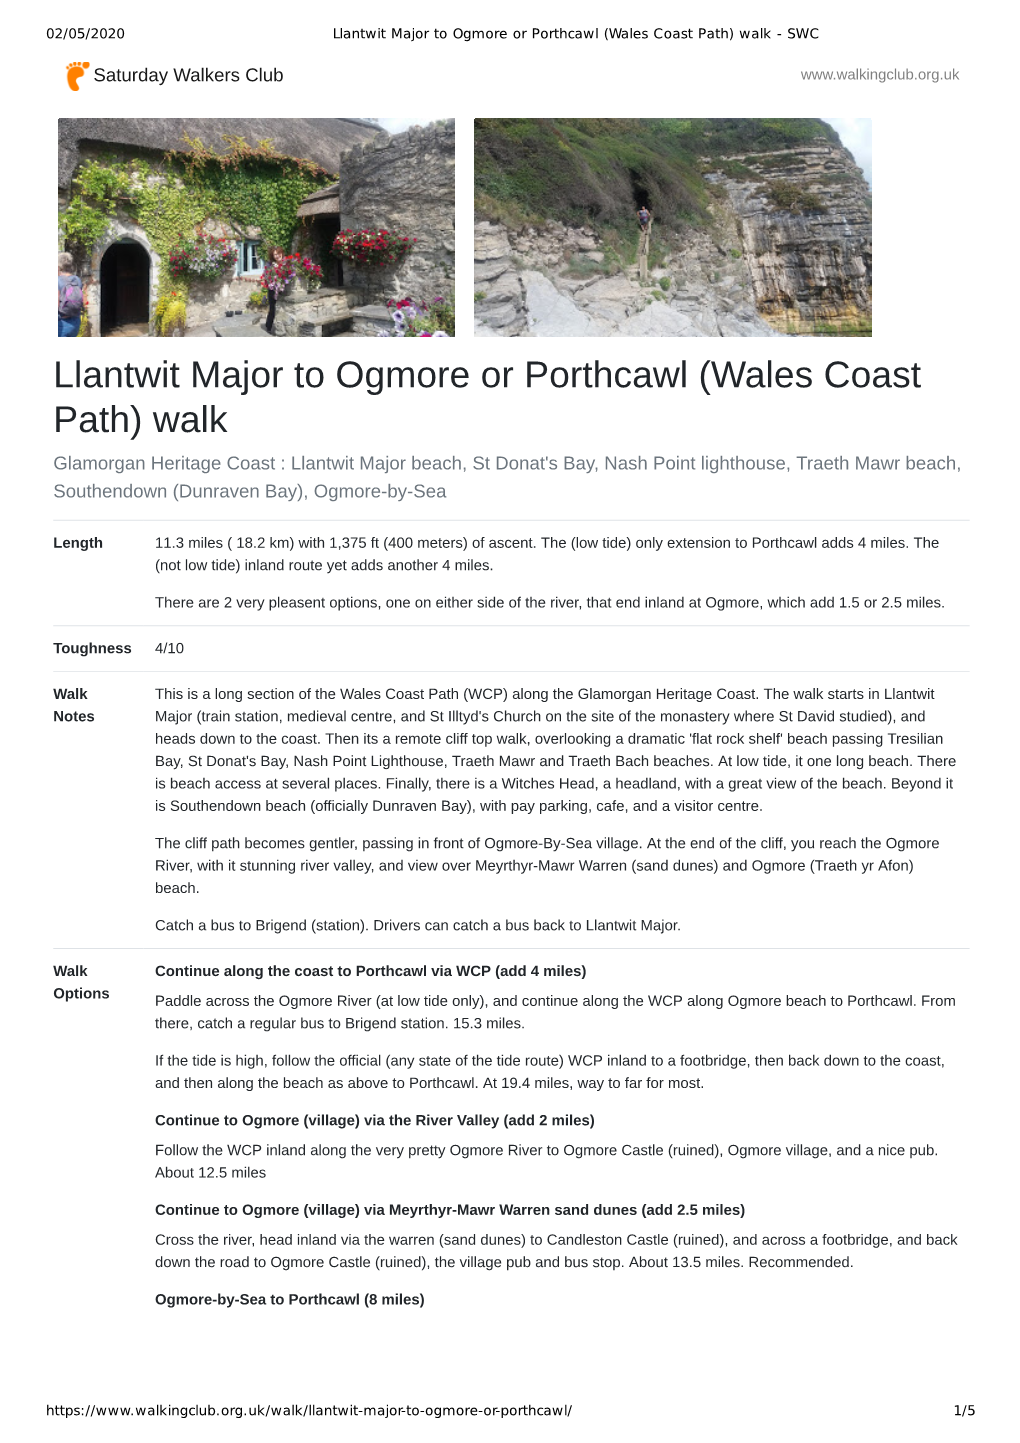 Llantwit Major to Ogmore Or Porthcawl (Wales Coast Path) Walk - SWC